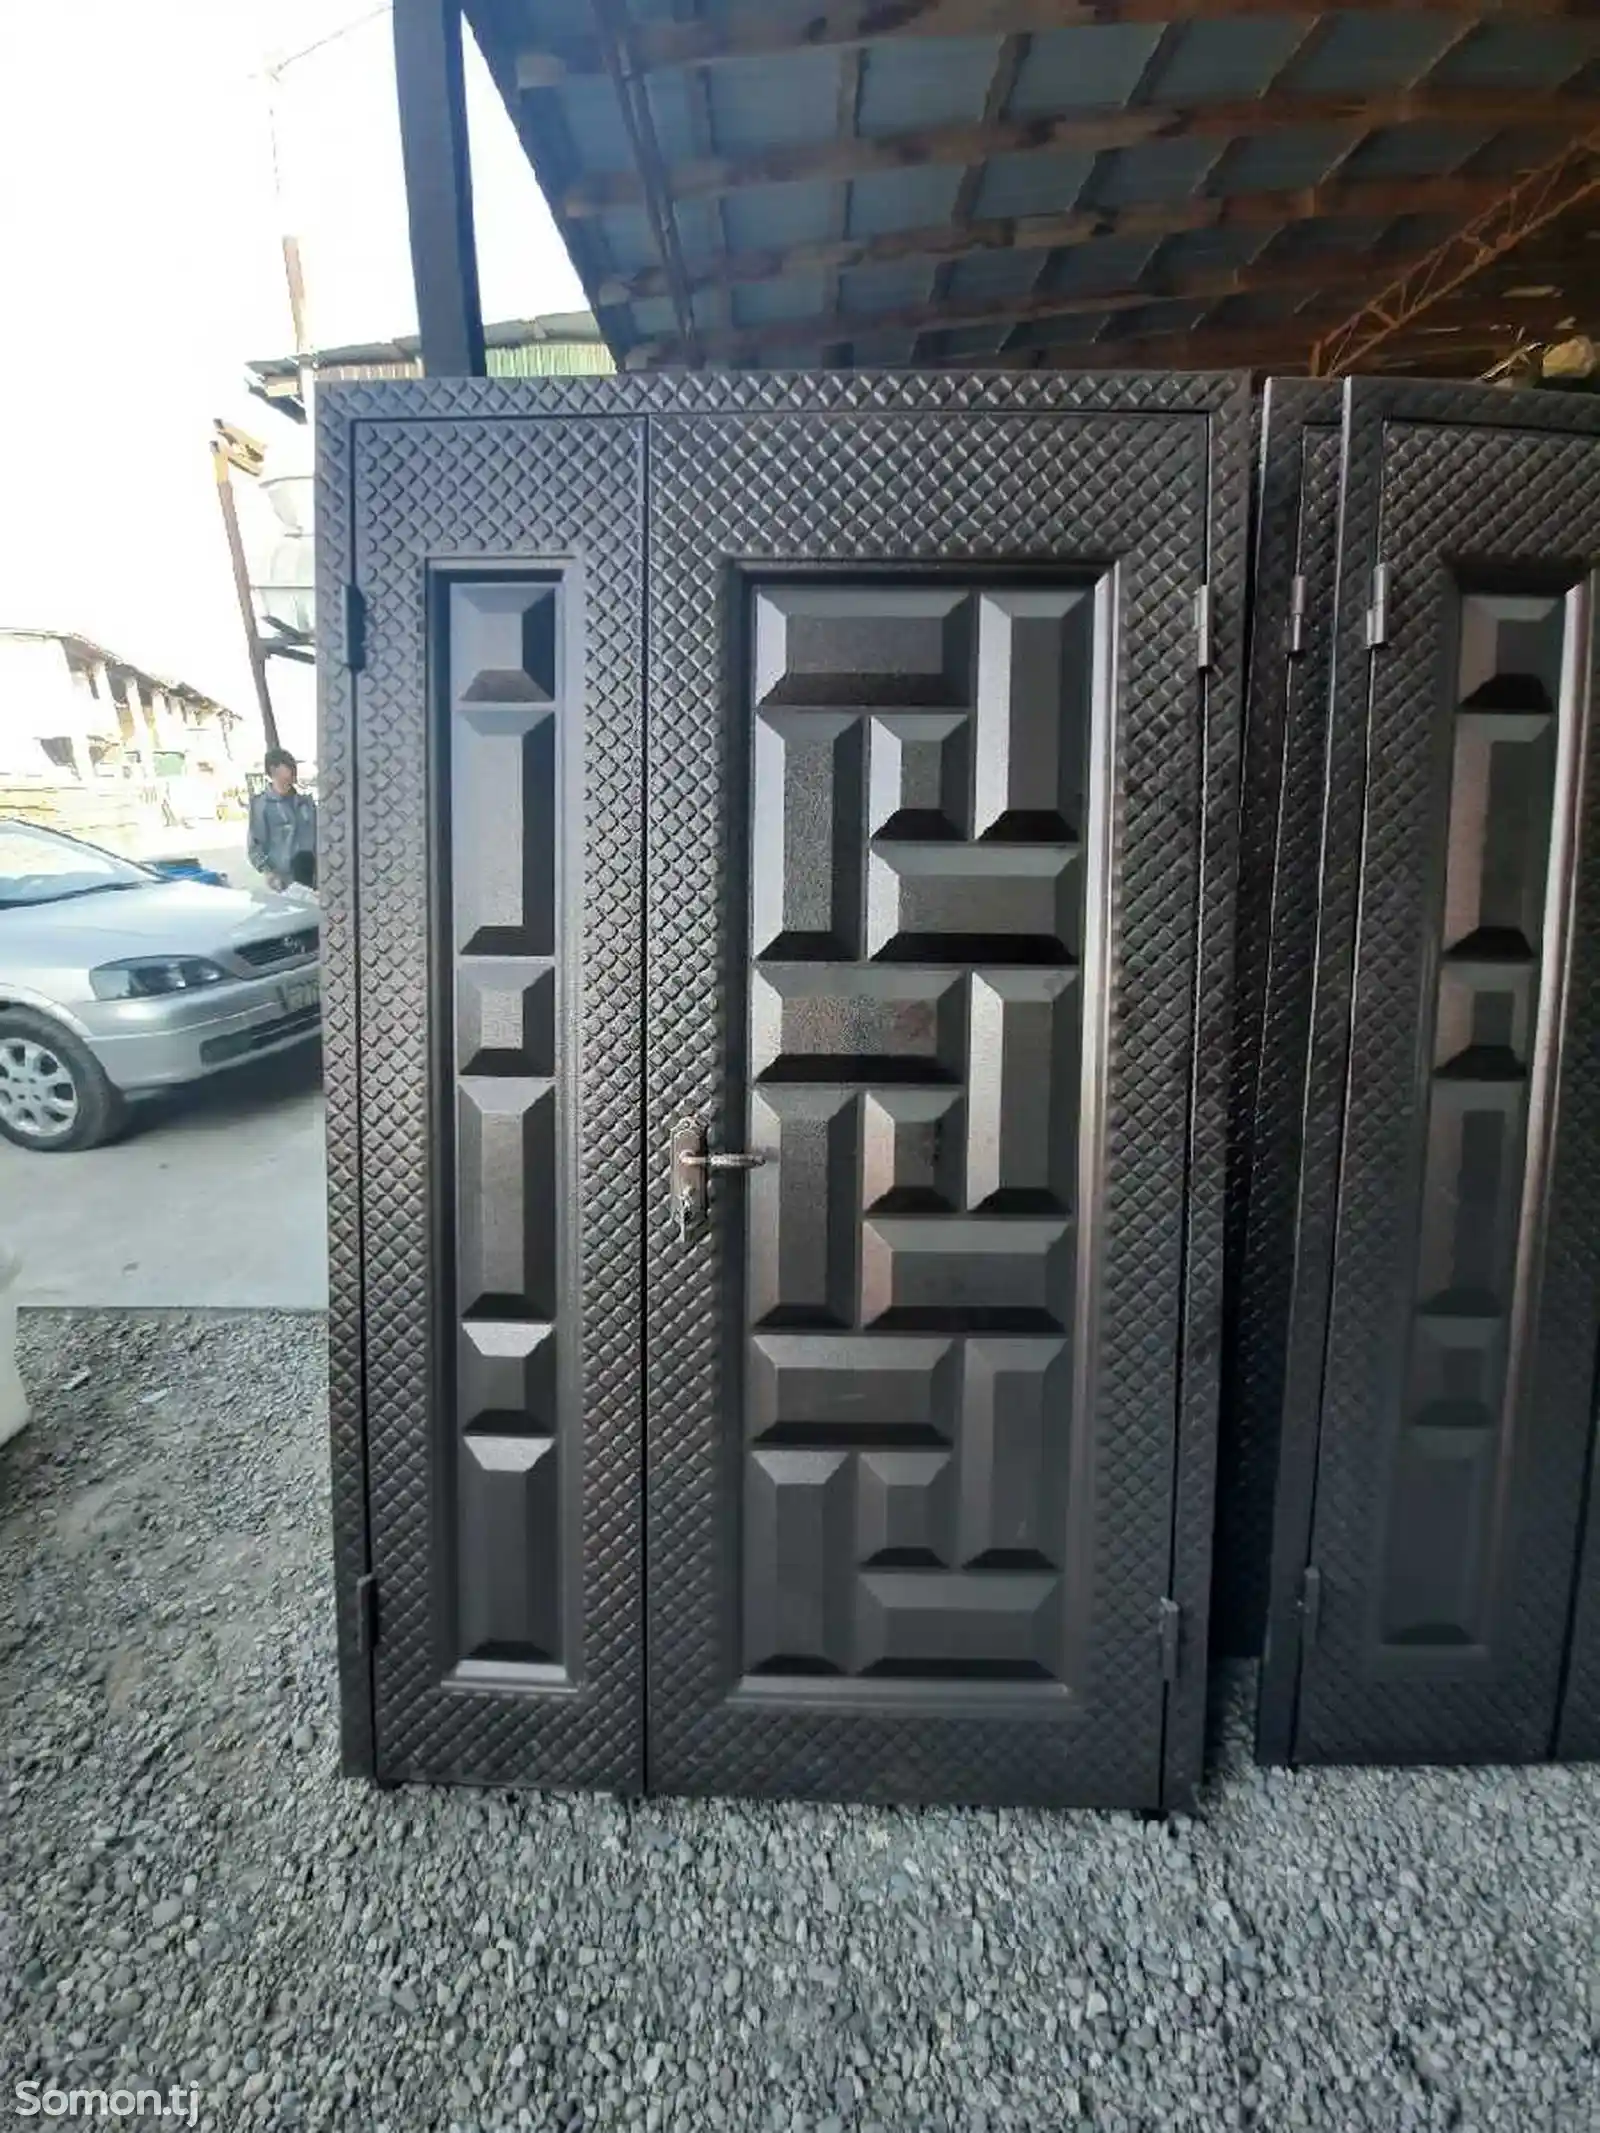 Железная дверь